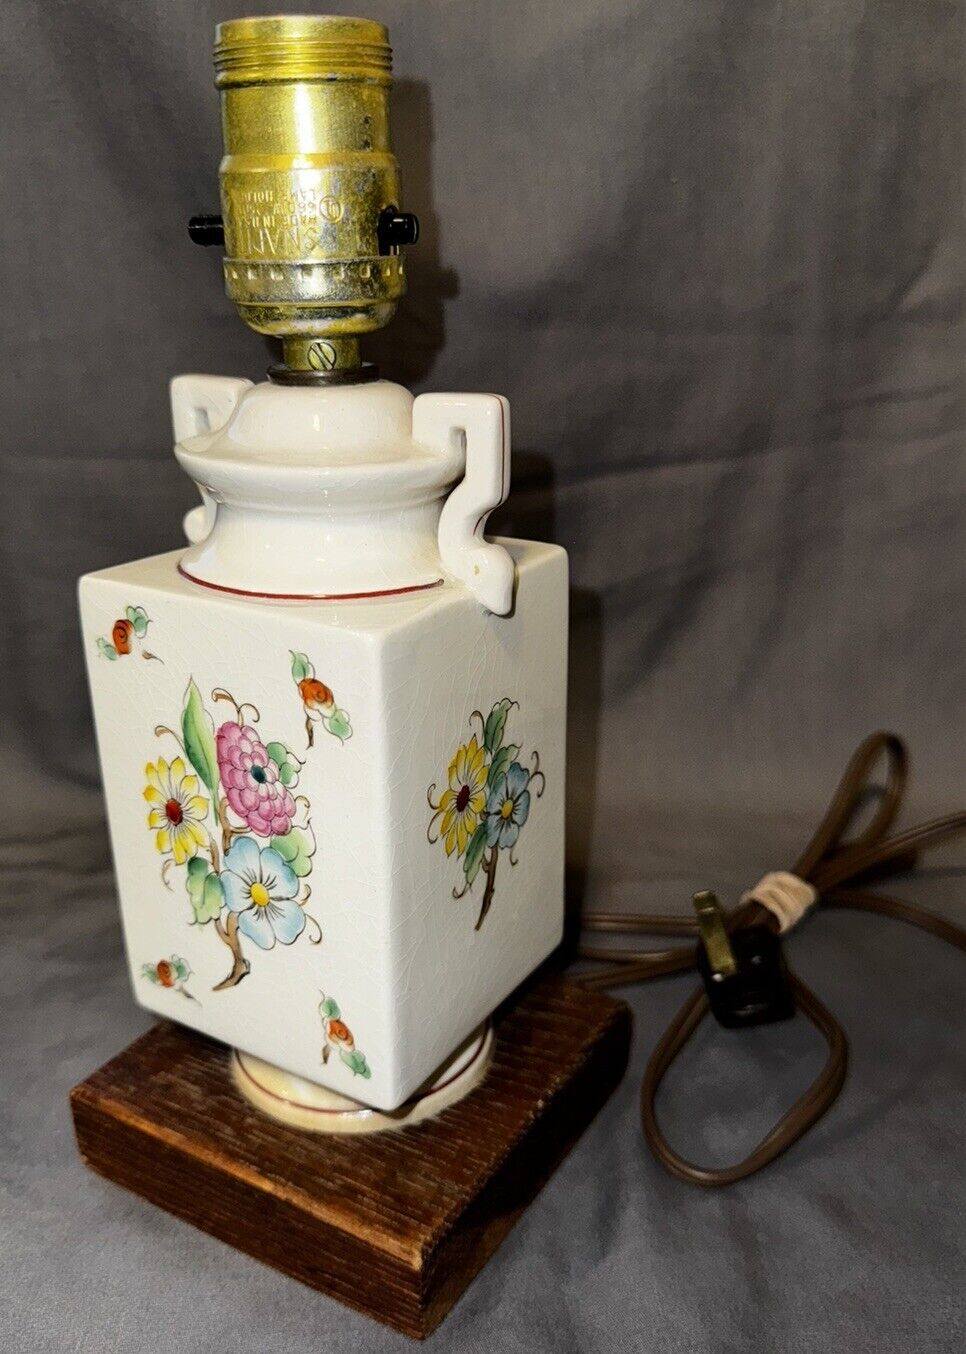 Vintage Ceramic Lamp Base - No Shade - WORKS